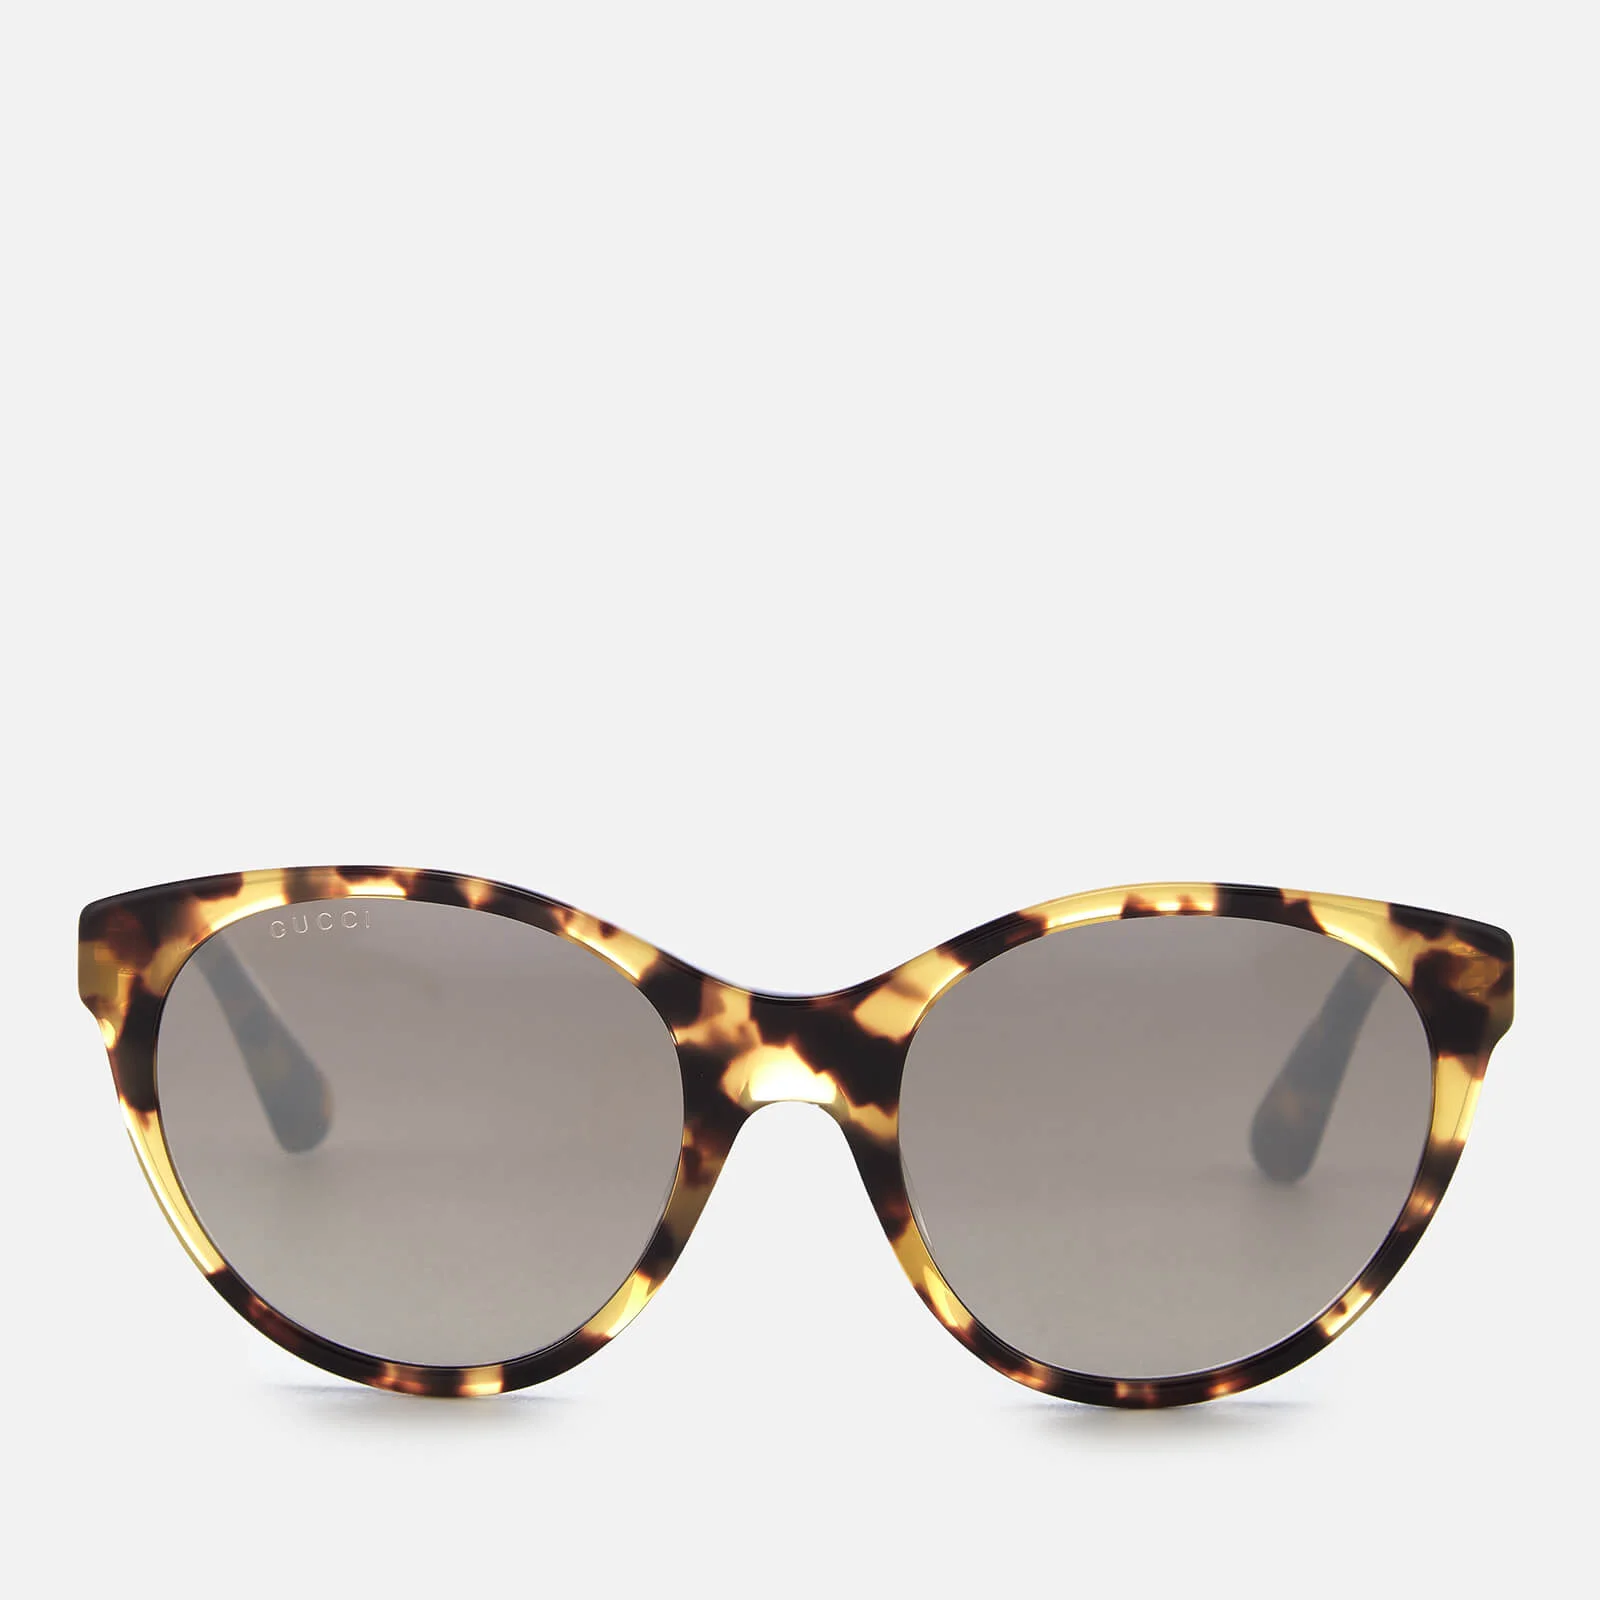 Gucci Women's Oval Tortoiseshell Sunglasses - Brown Image 1